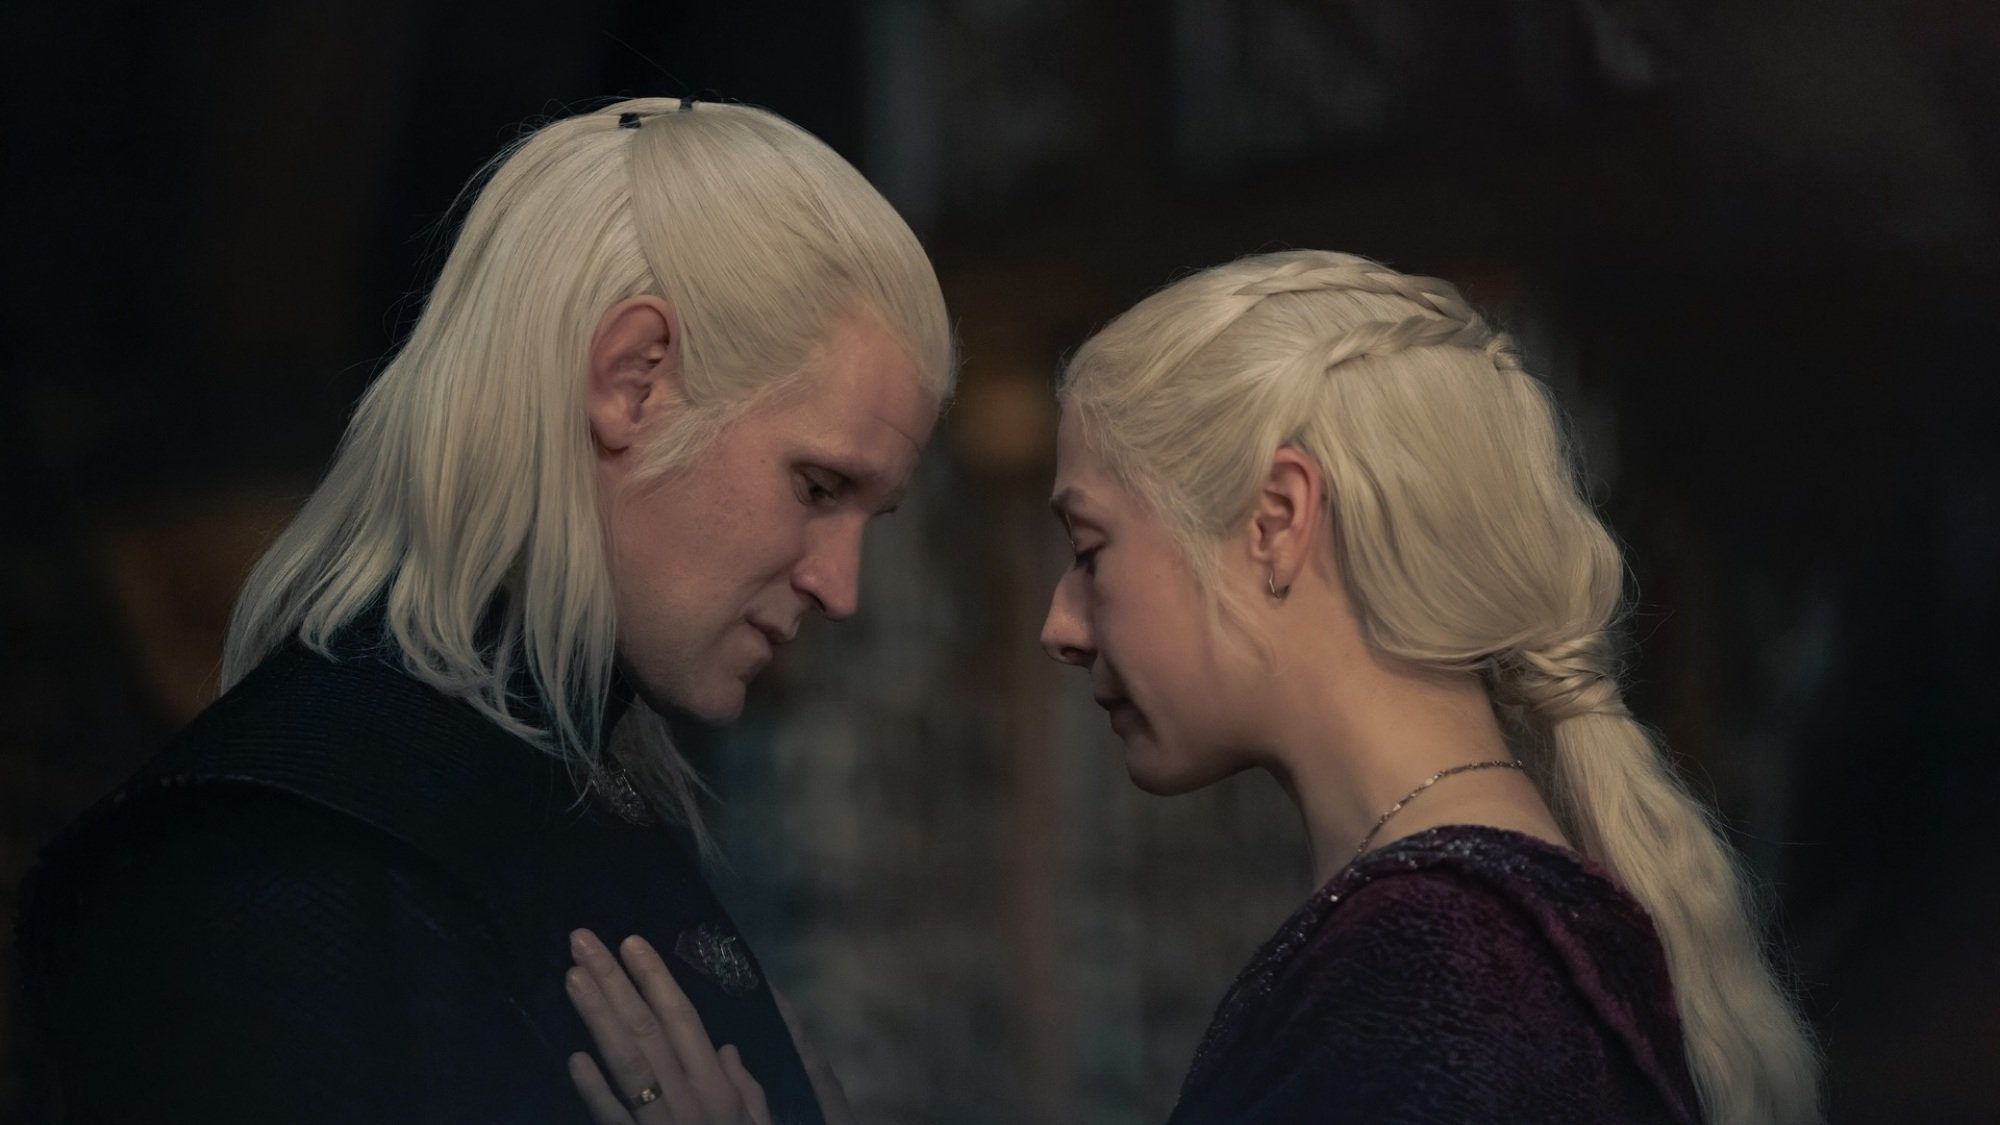 Rhaenyra and Daemon Targaryen standing face to face; Rhaenyra puts her hand on Daemon's chest.